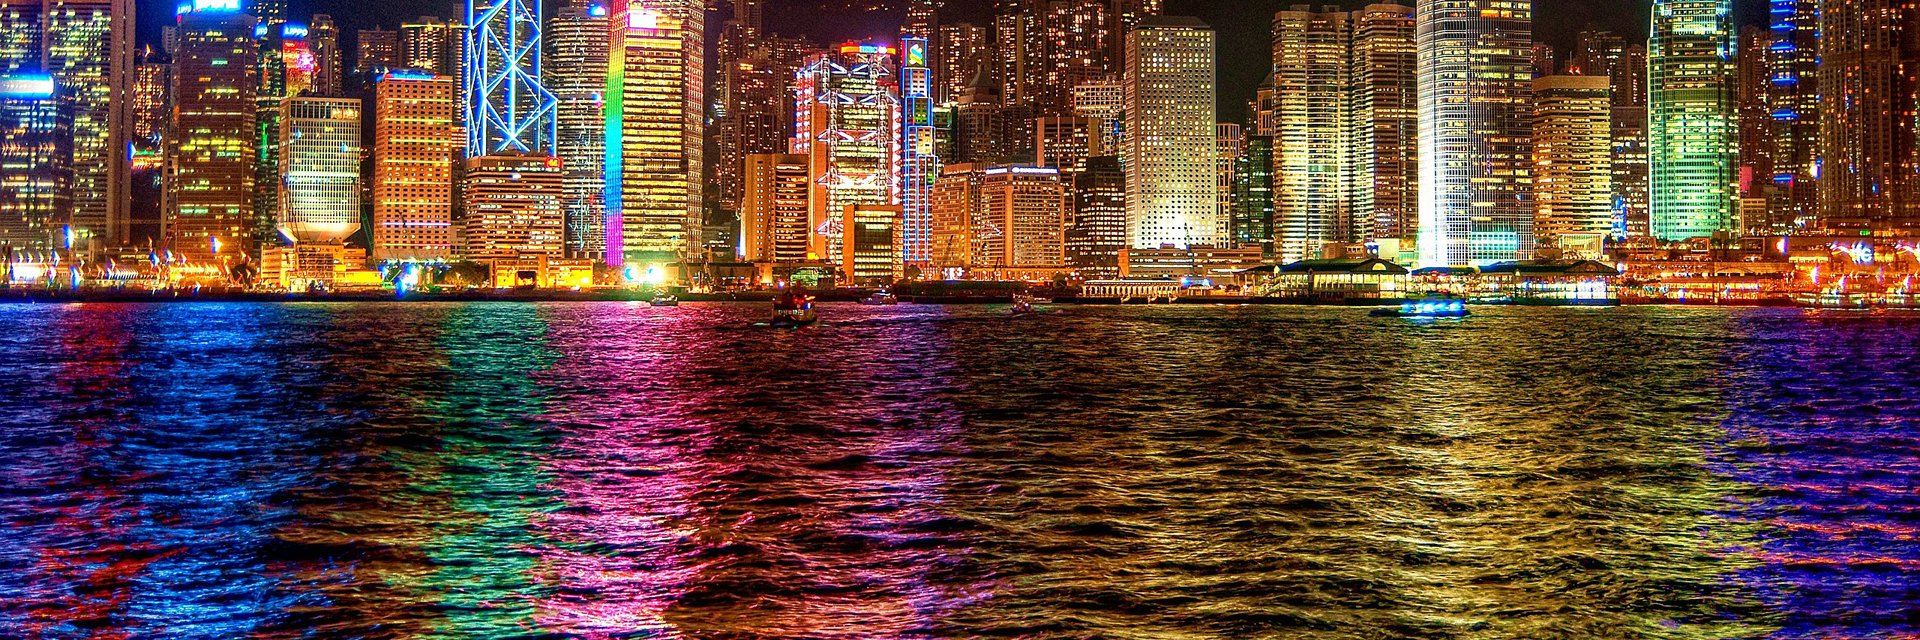 Auberge Discovery Bay Hong Kong 4* (Гонконг, Гонконг) - цены, отзывы, фото, бронирование - ПАКС